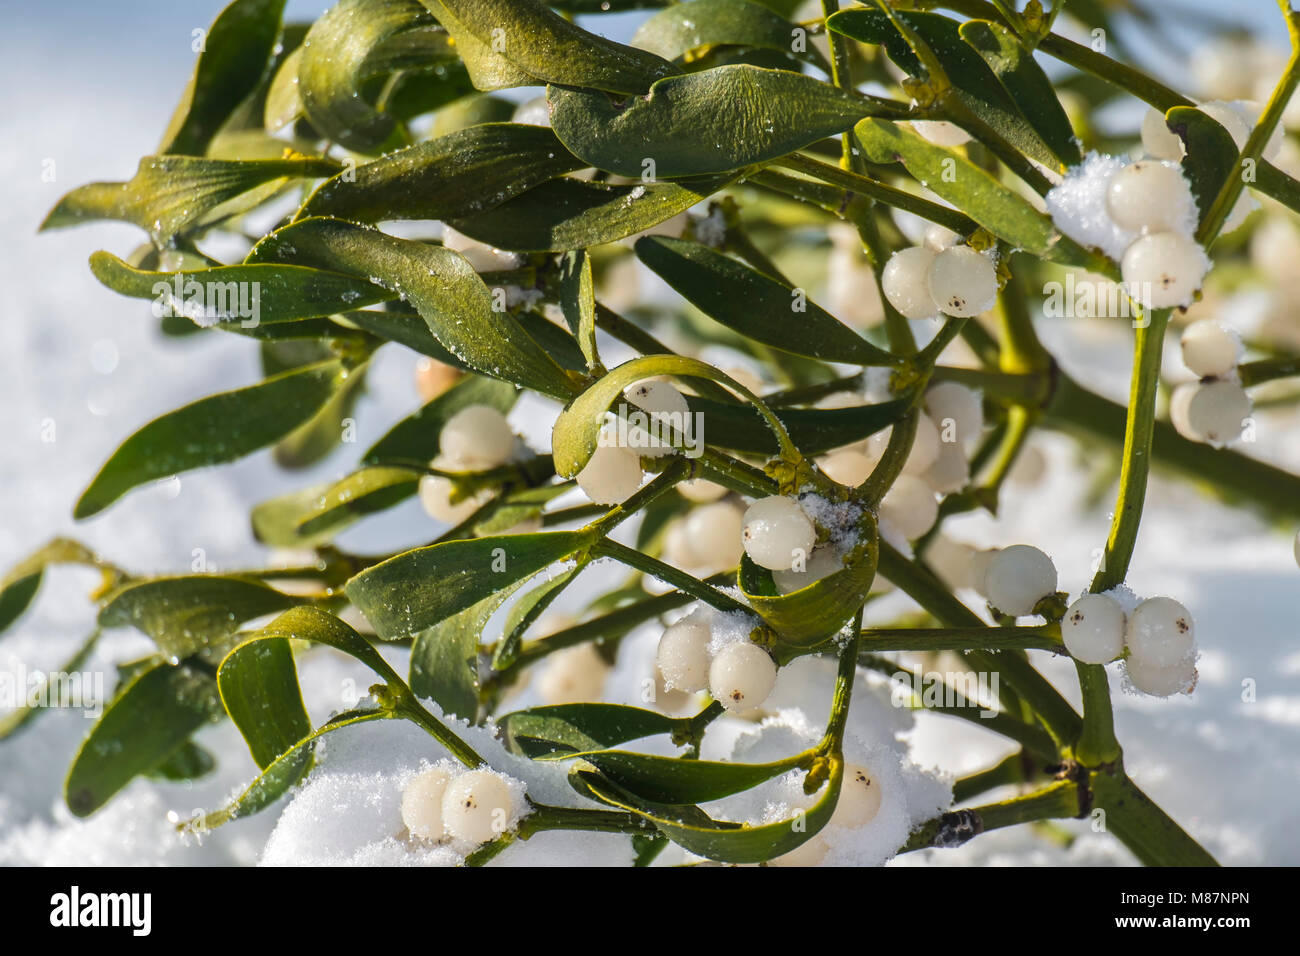 Evergreen branch of mistletoe with ripe berries on snow (Viscum album) Stock Photo